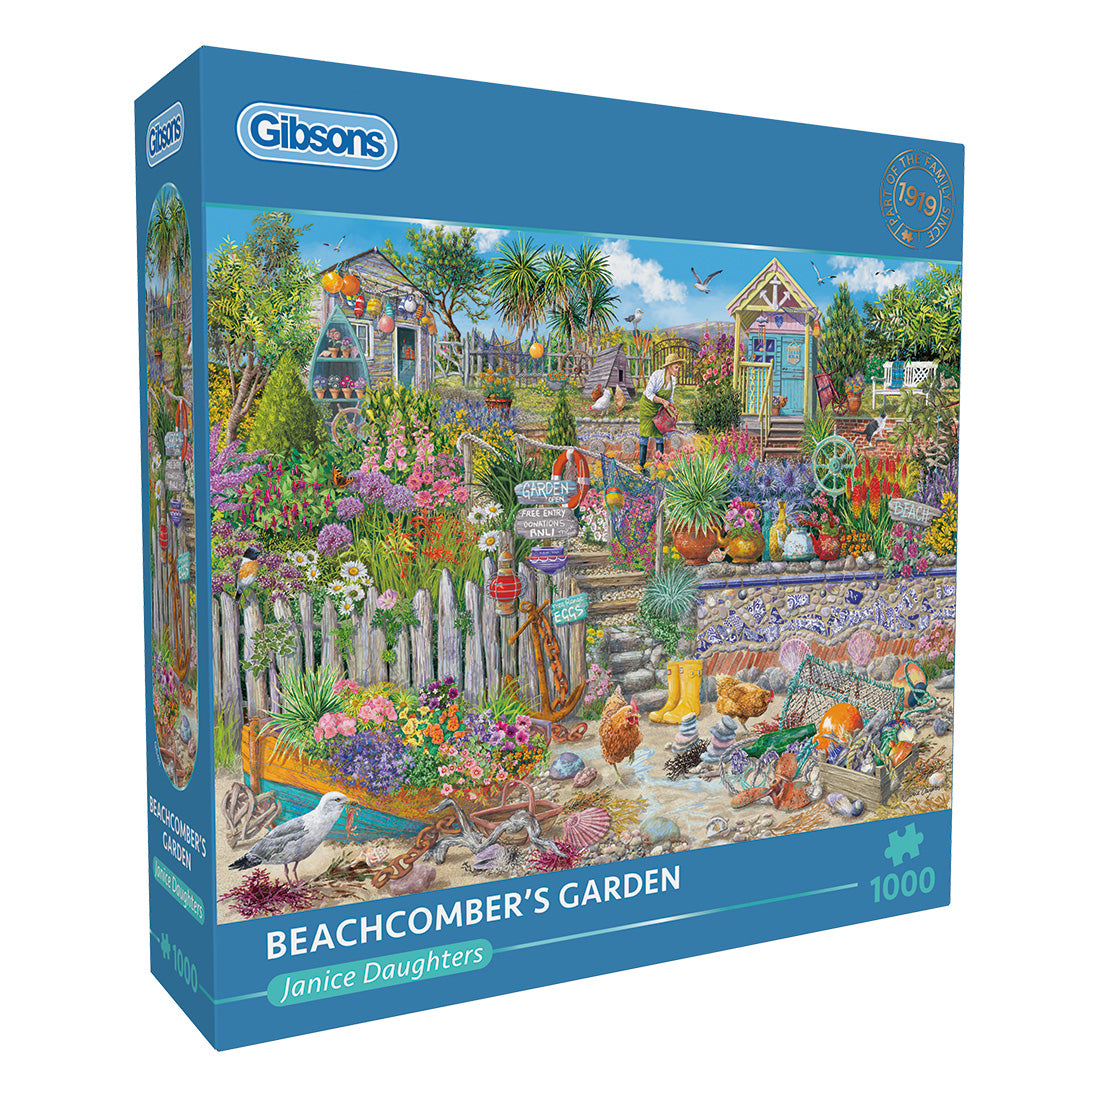 Gibsons - Beachcomber's Garden - 1000 Piece Jigsaw Puzzle